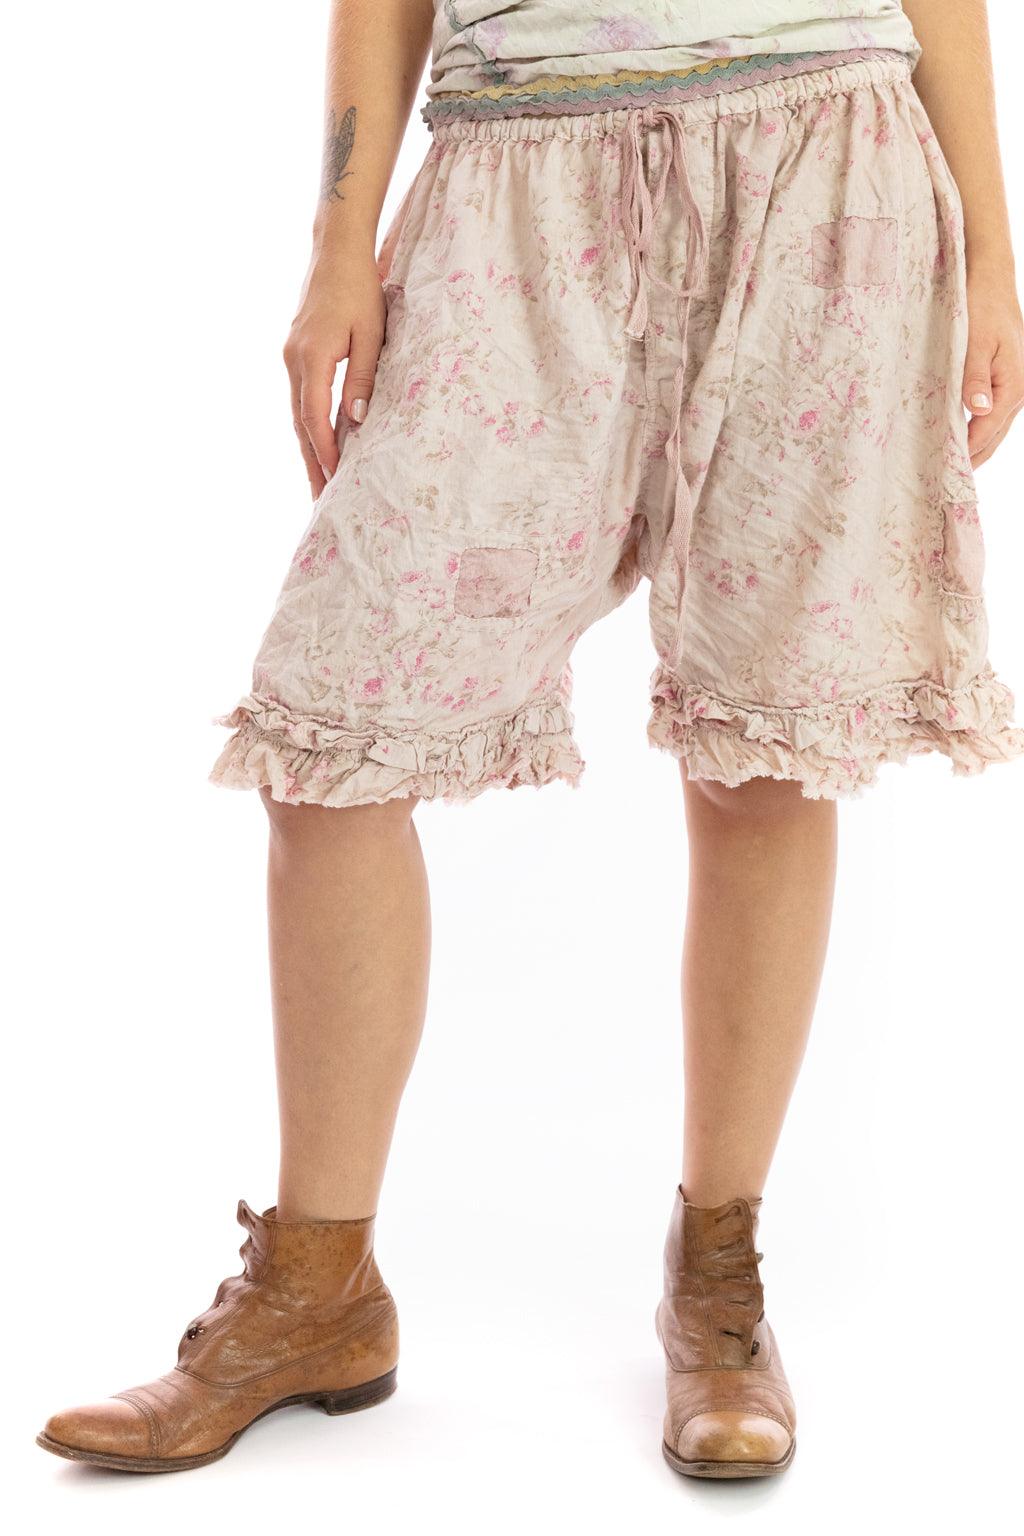 Floral Khloe Shorts - Magnolia Pearl Clothing